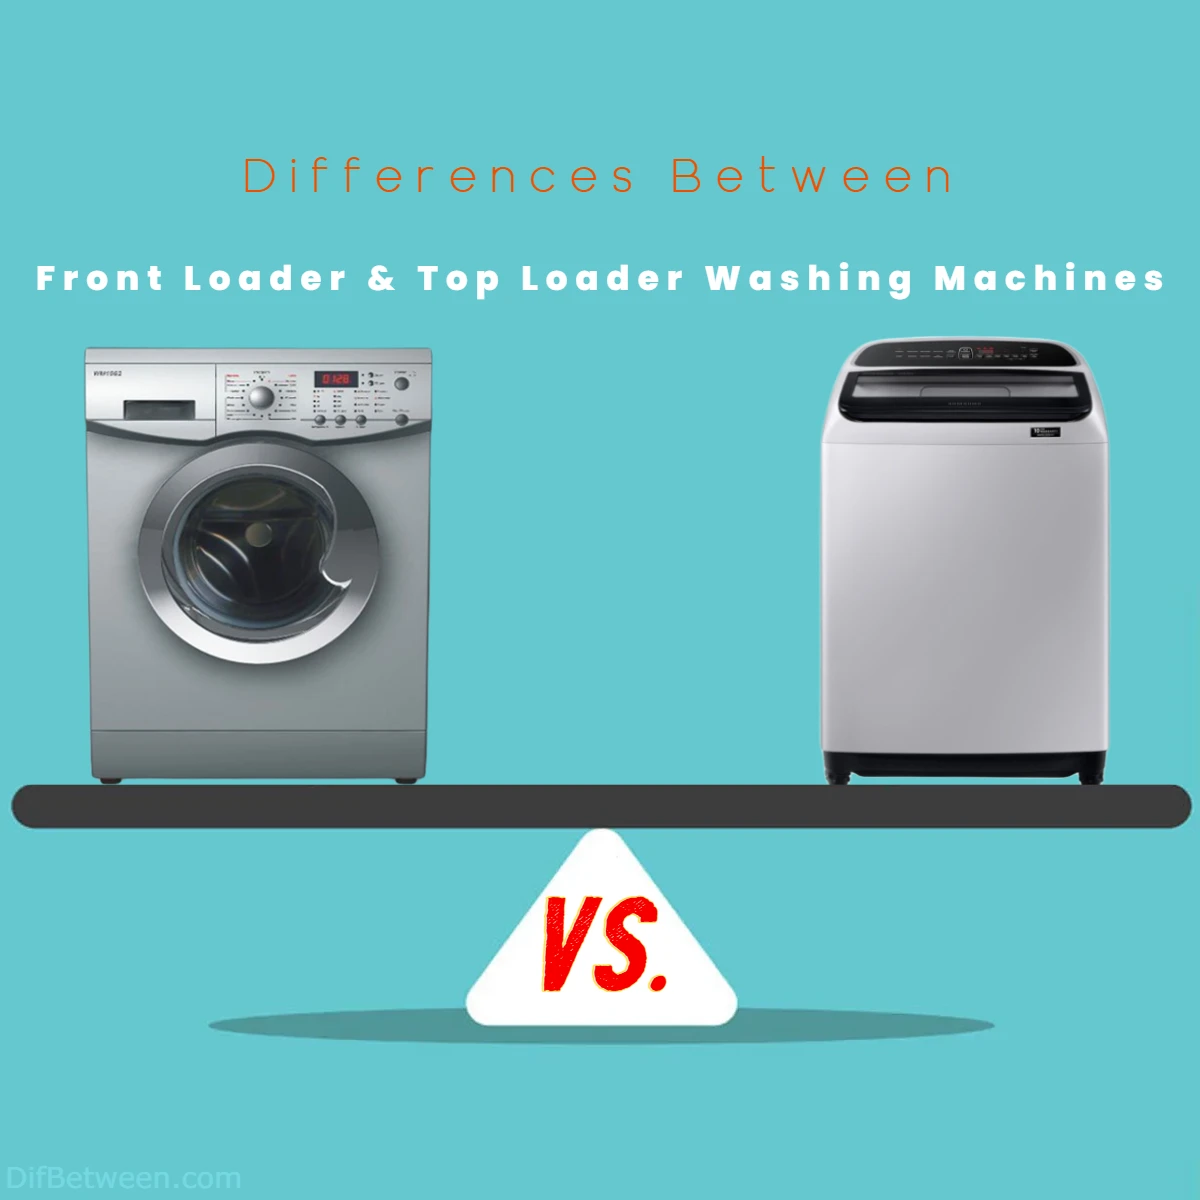 Front Loader vs Top Loader Washing Machines: Key Differences